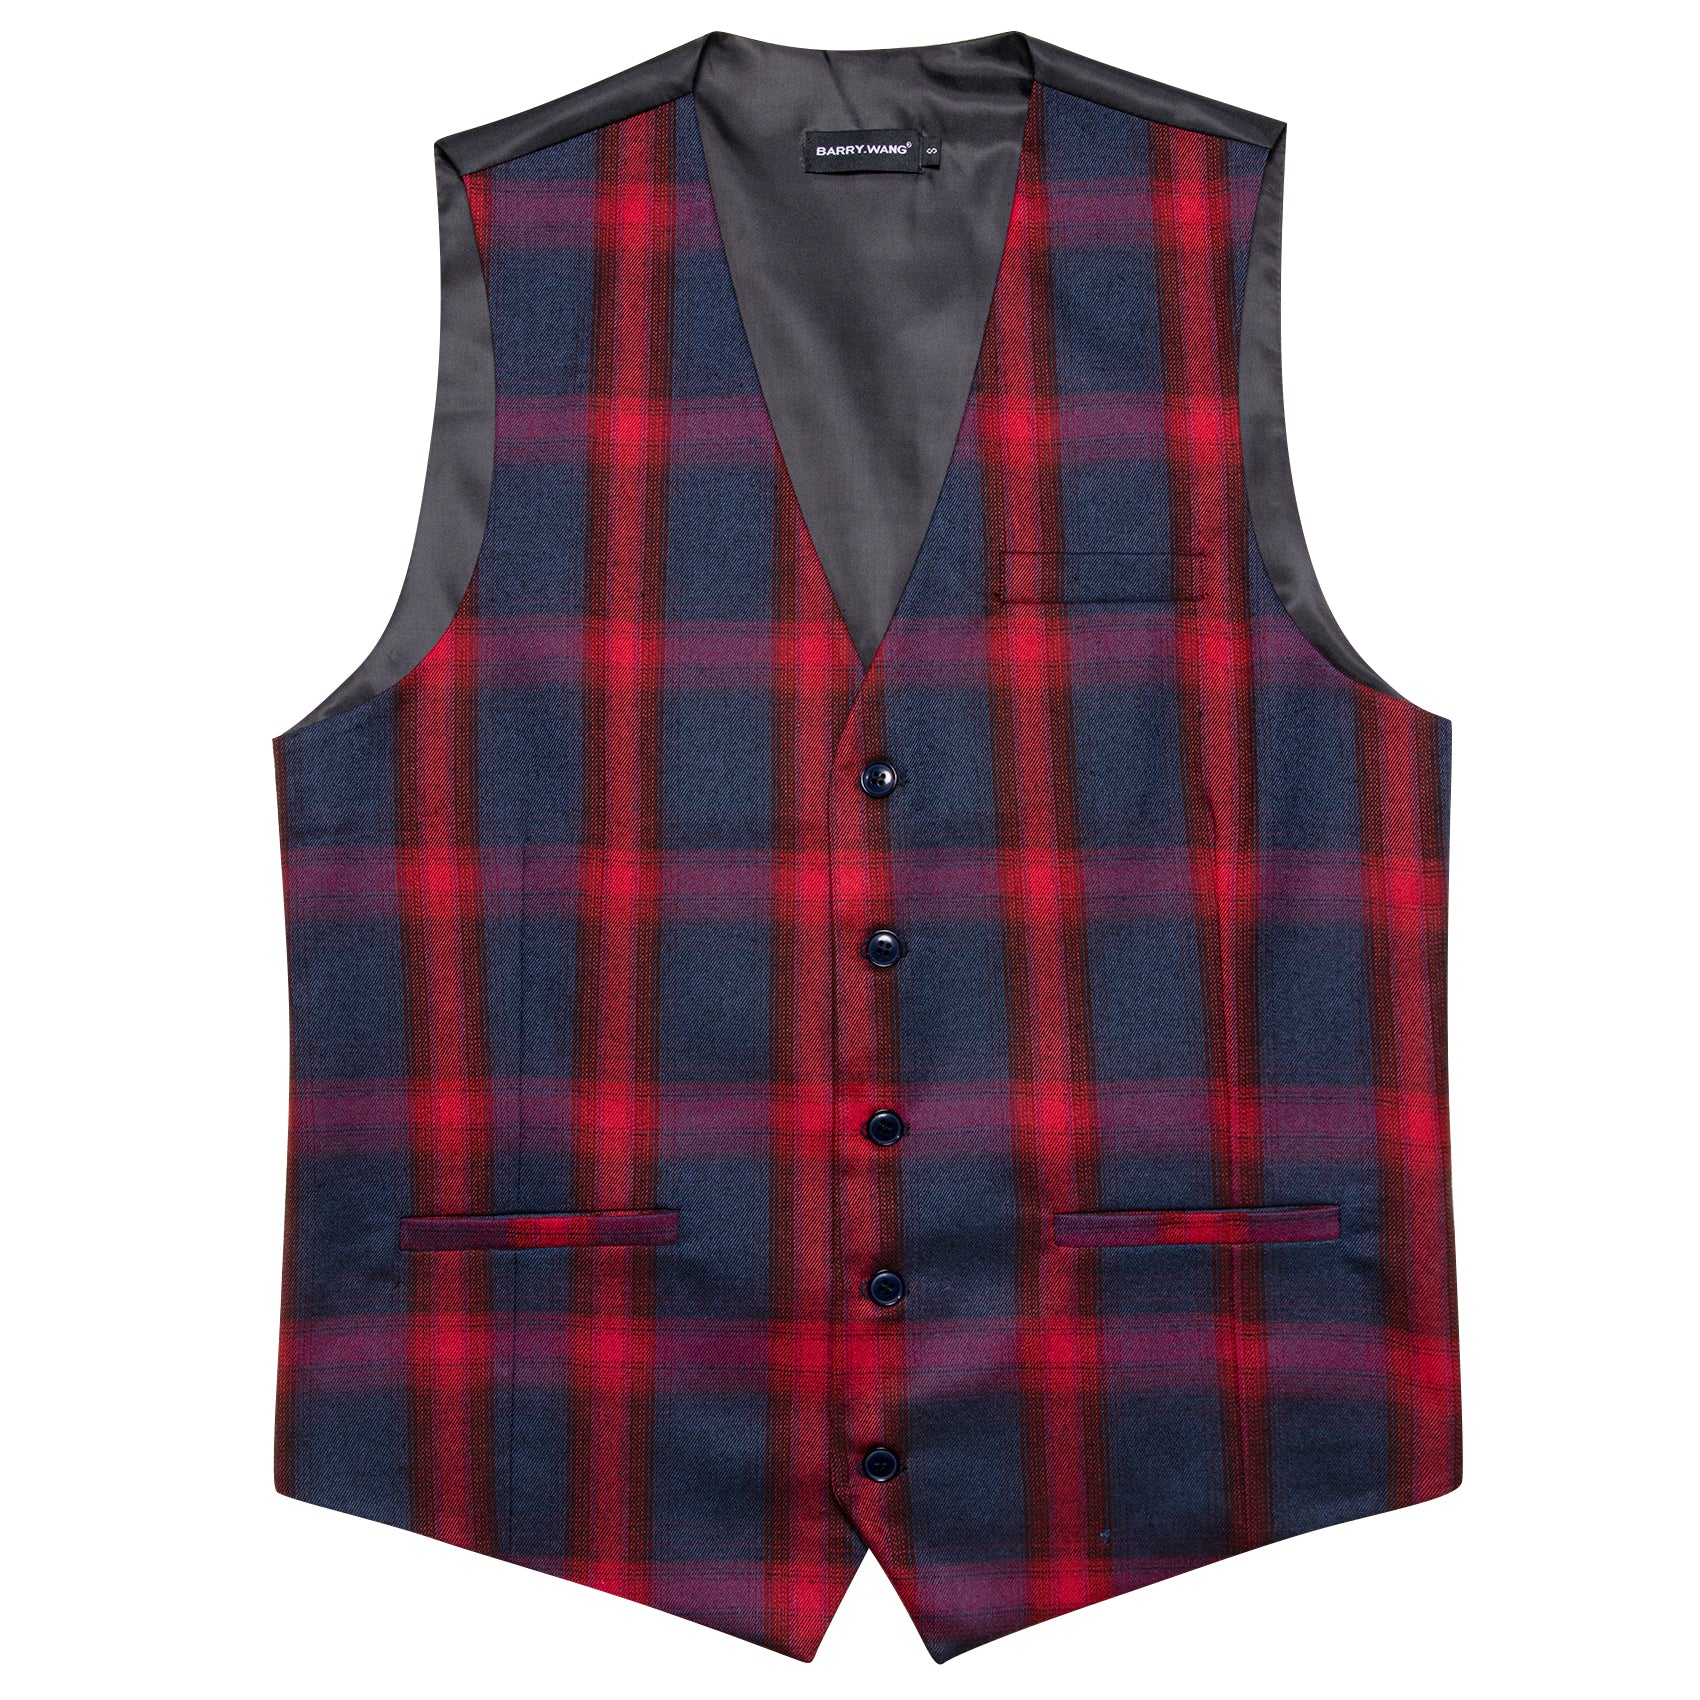 Barry.wang Classy Red Black Plaid Vest Waistcoat Set